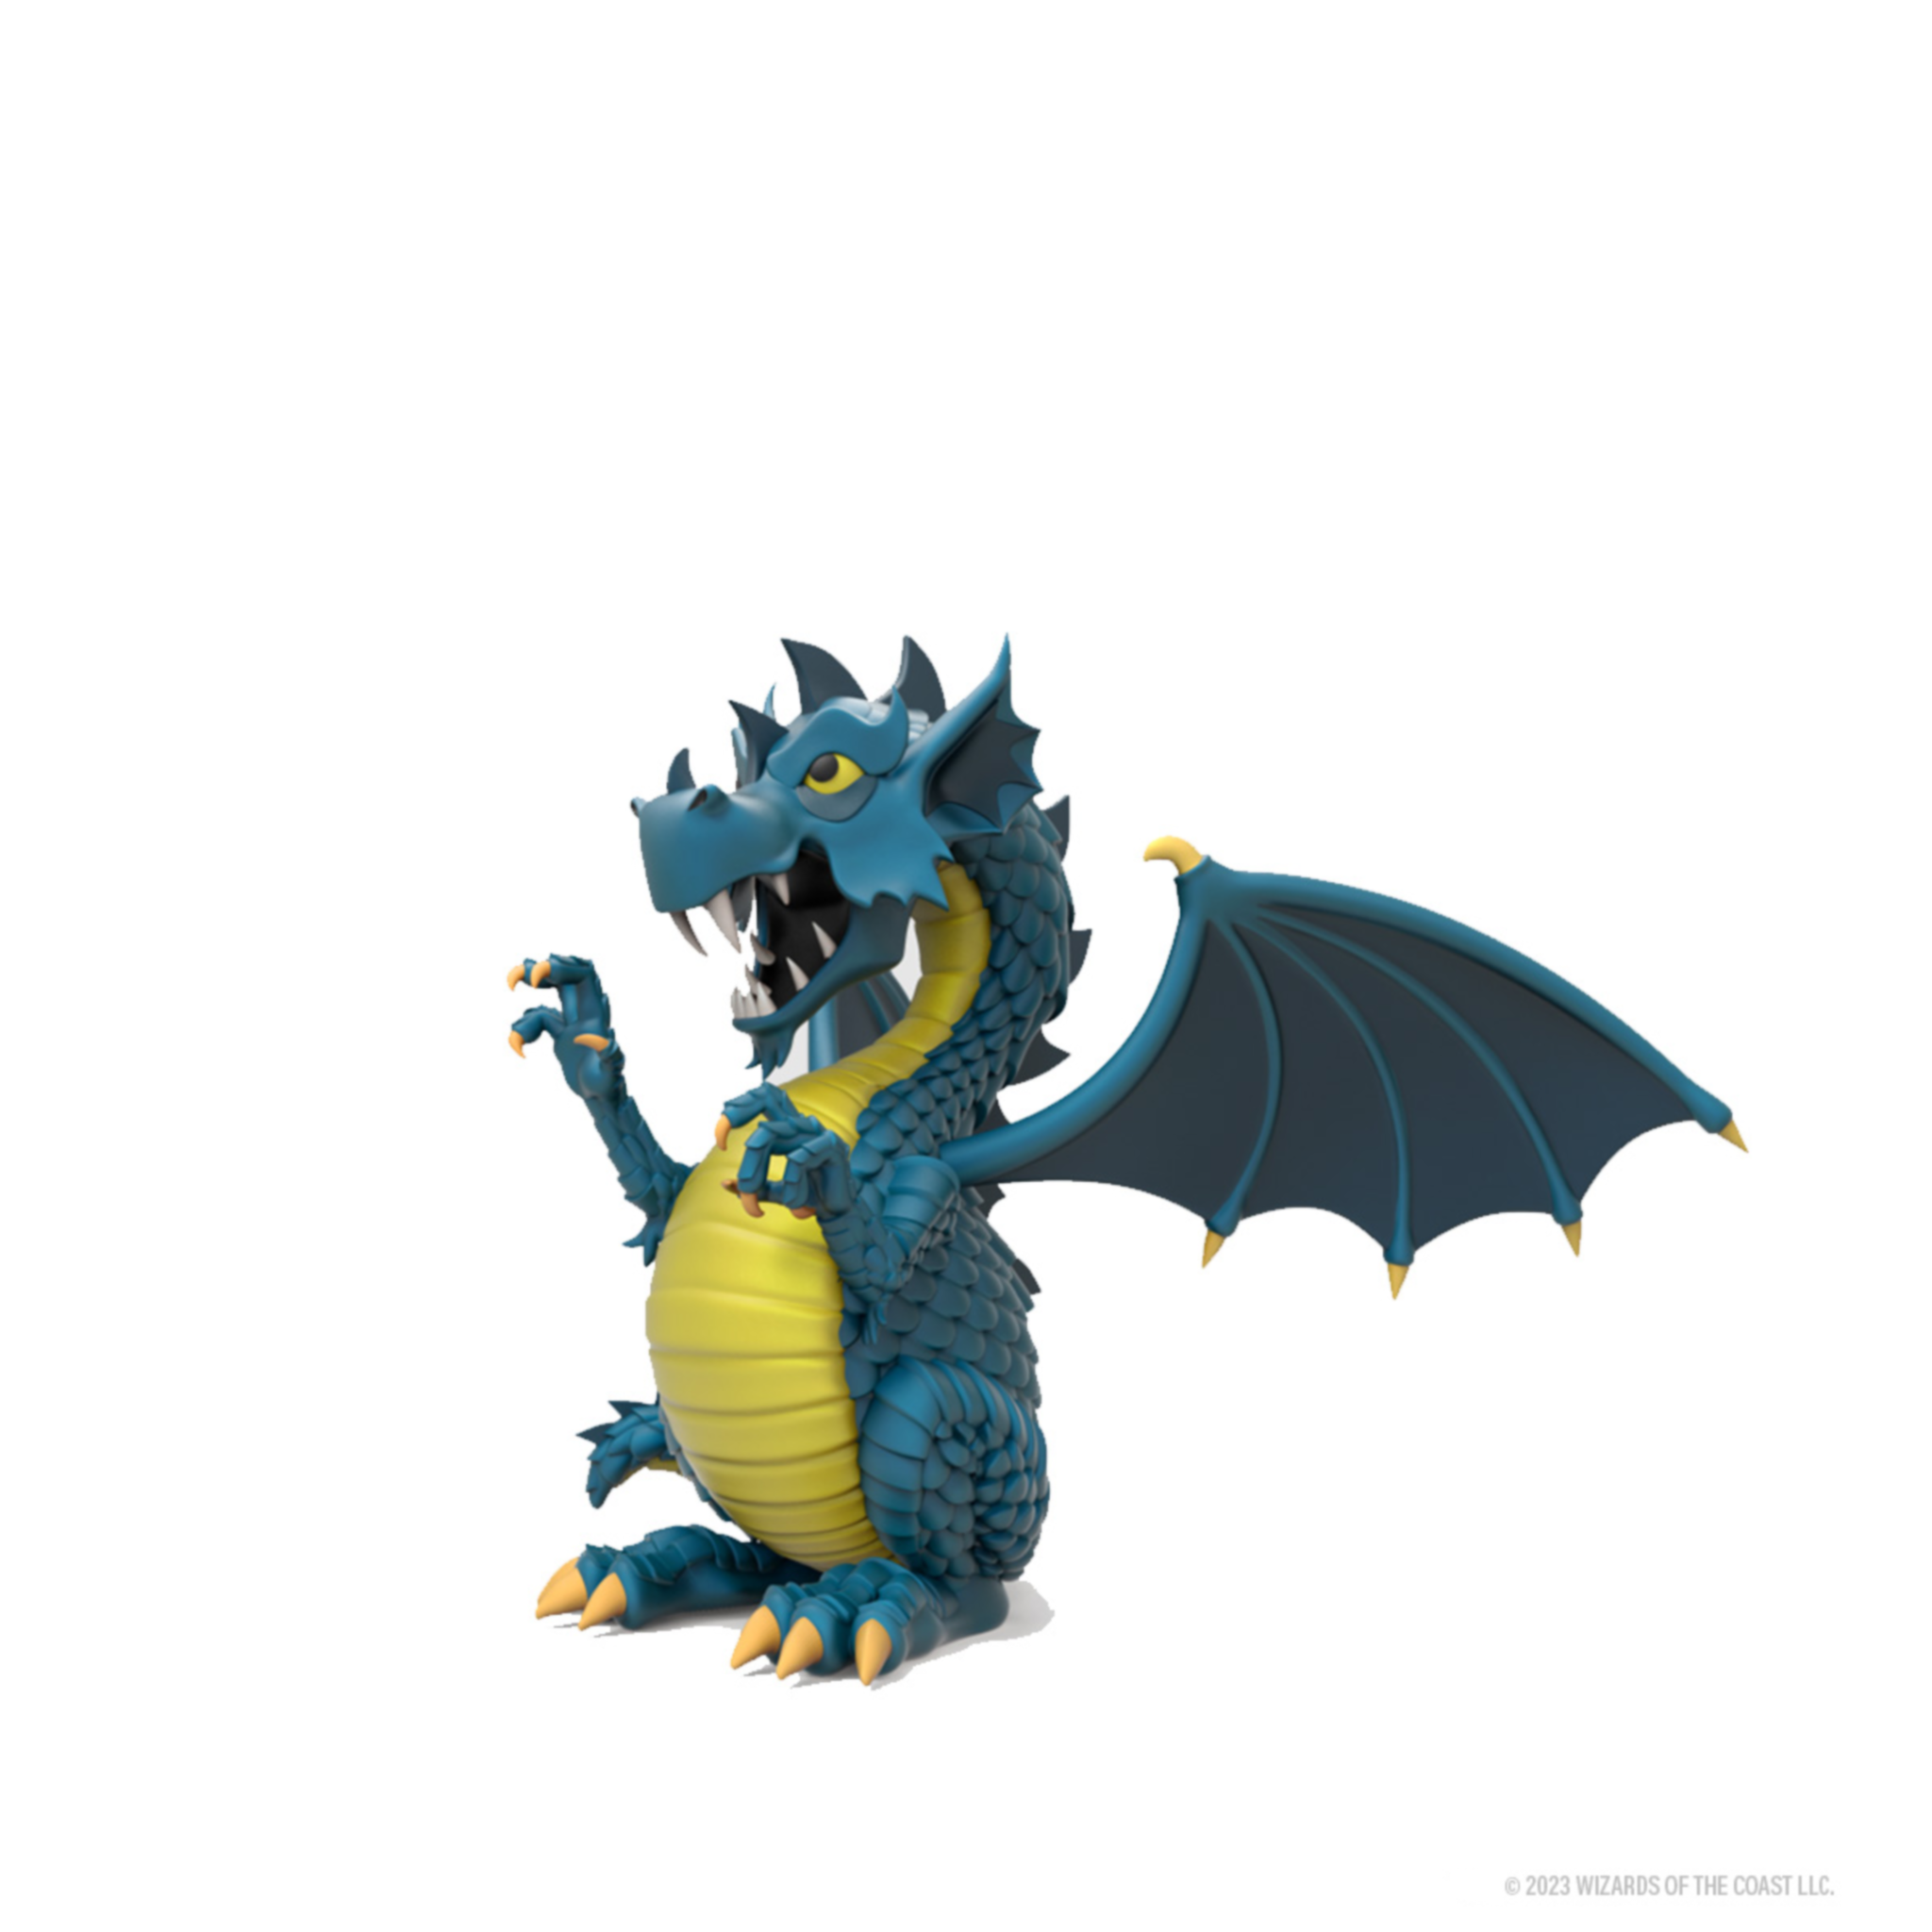 Dungeons & Dragons: 3″ Vinyl Mini – Monster Series 2